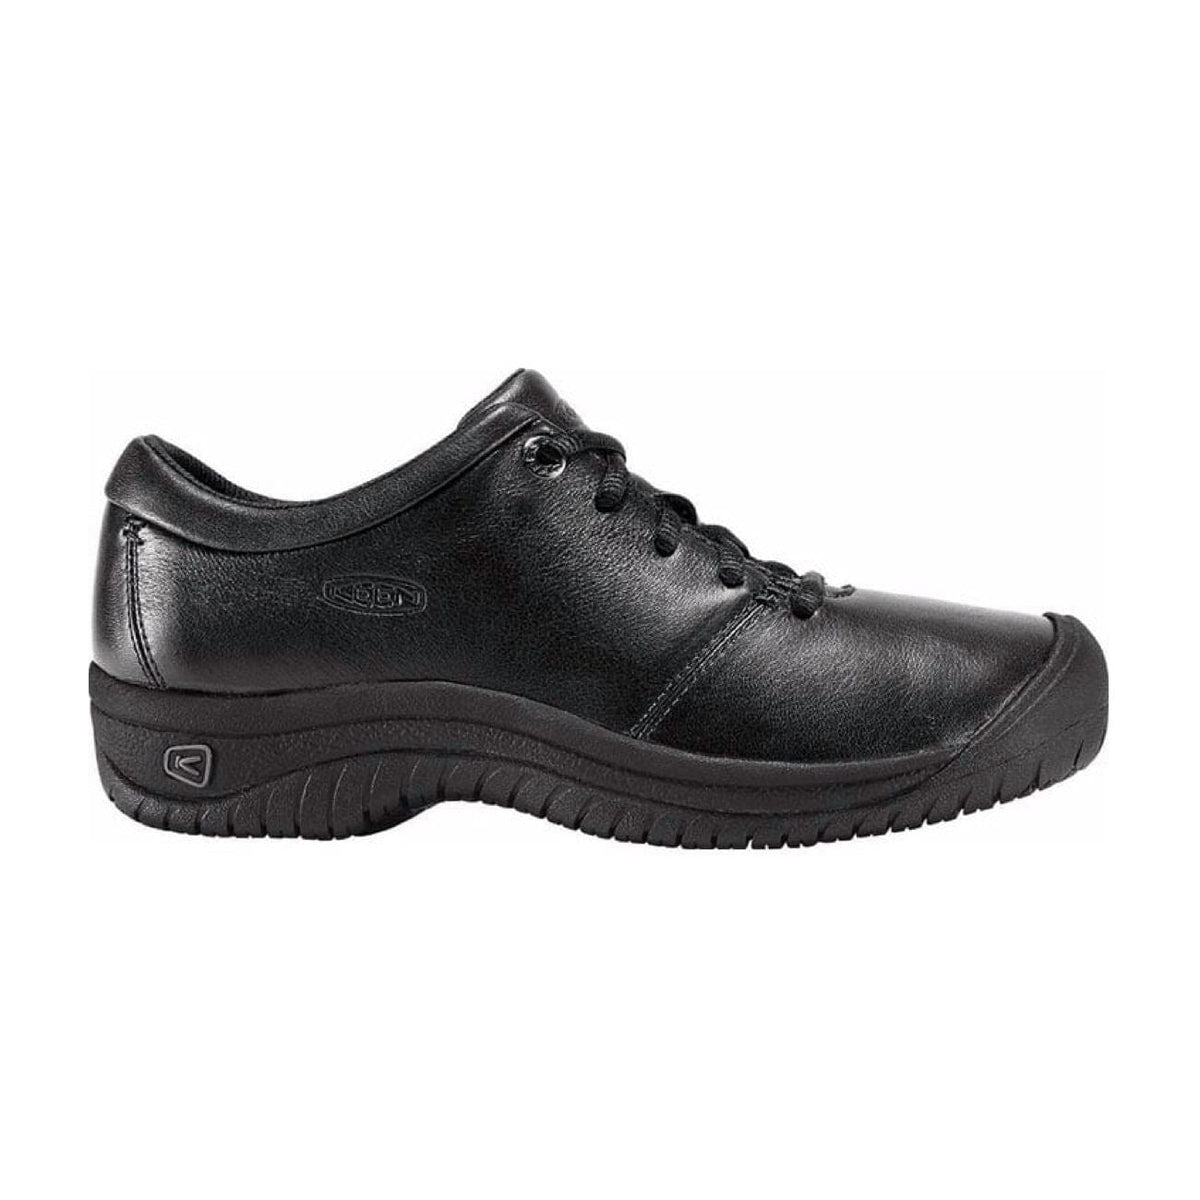 Keen, PTC Oxford, Leather, Women’s, Black Shoes Keen 